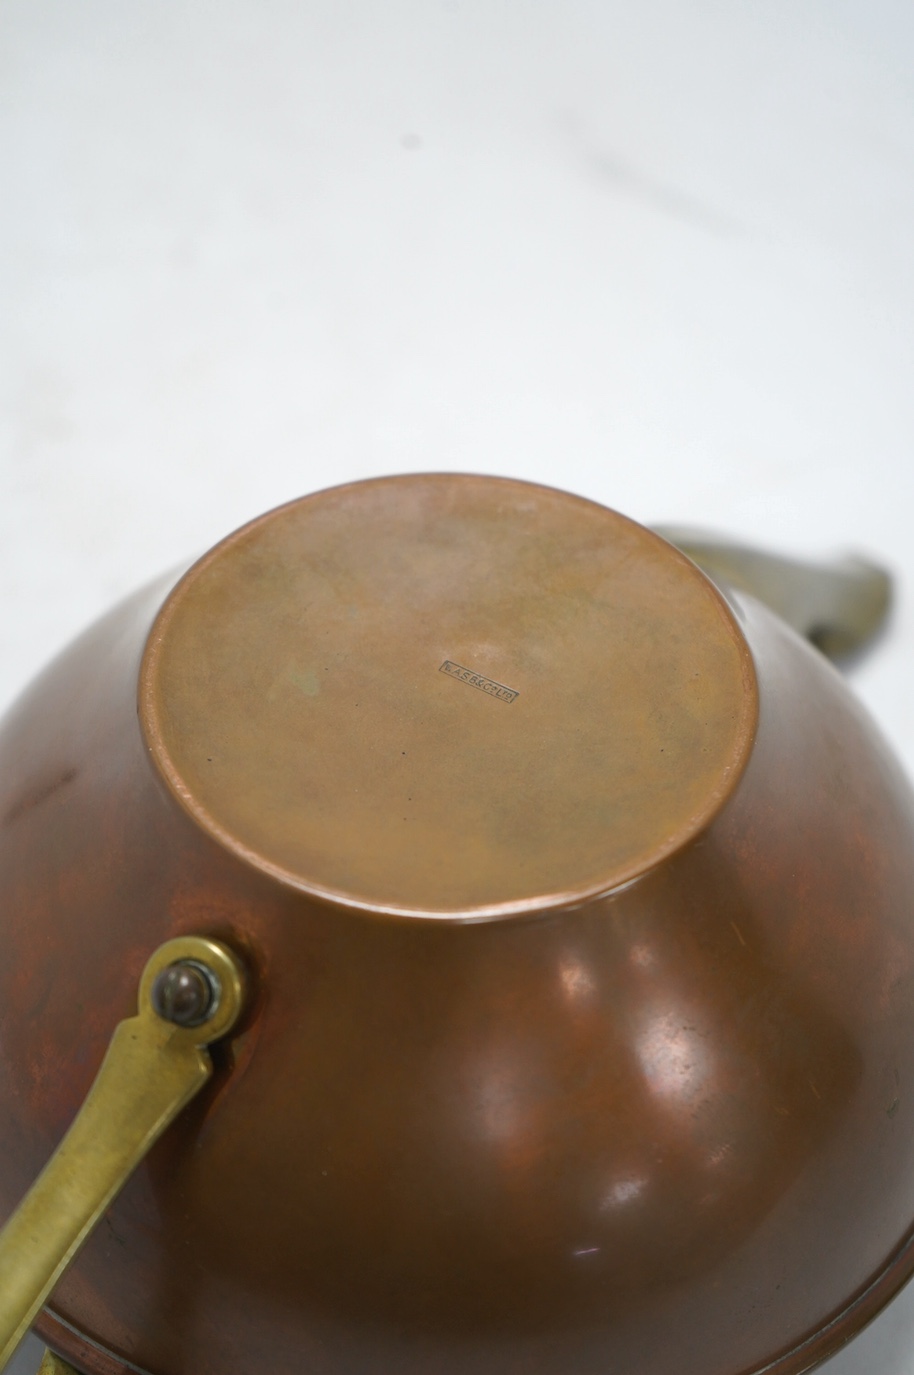 An Arts & Crafts W A S Benson teapot, 11cm high. Condition - fair